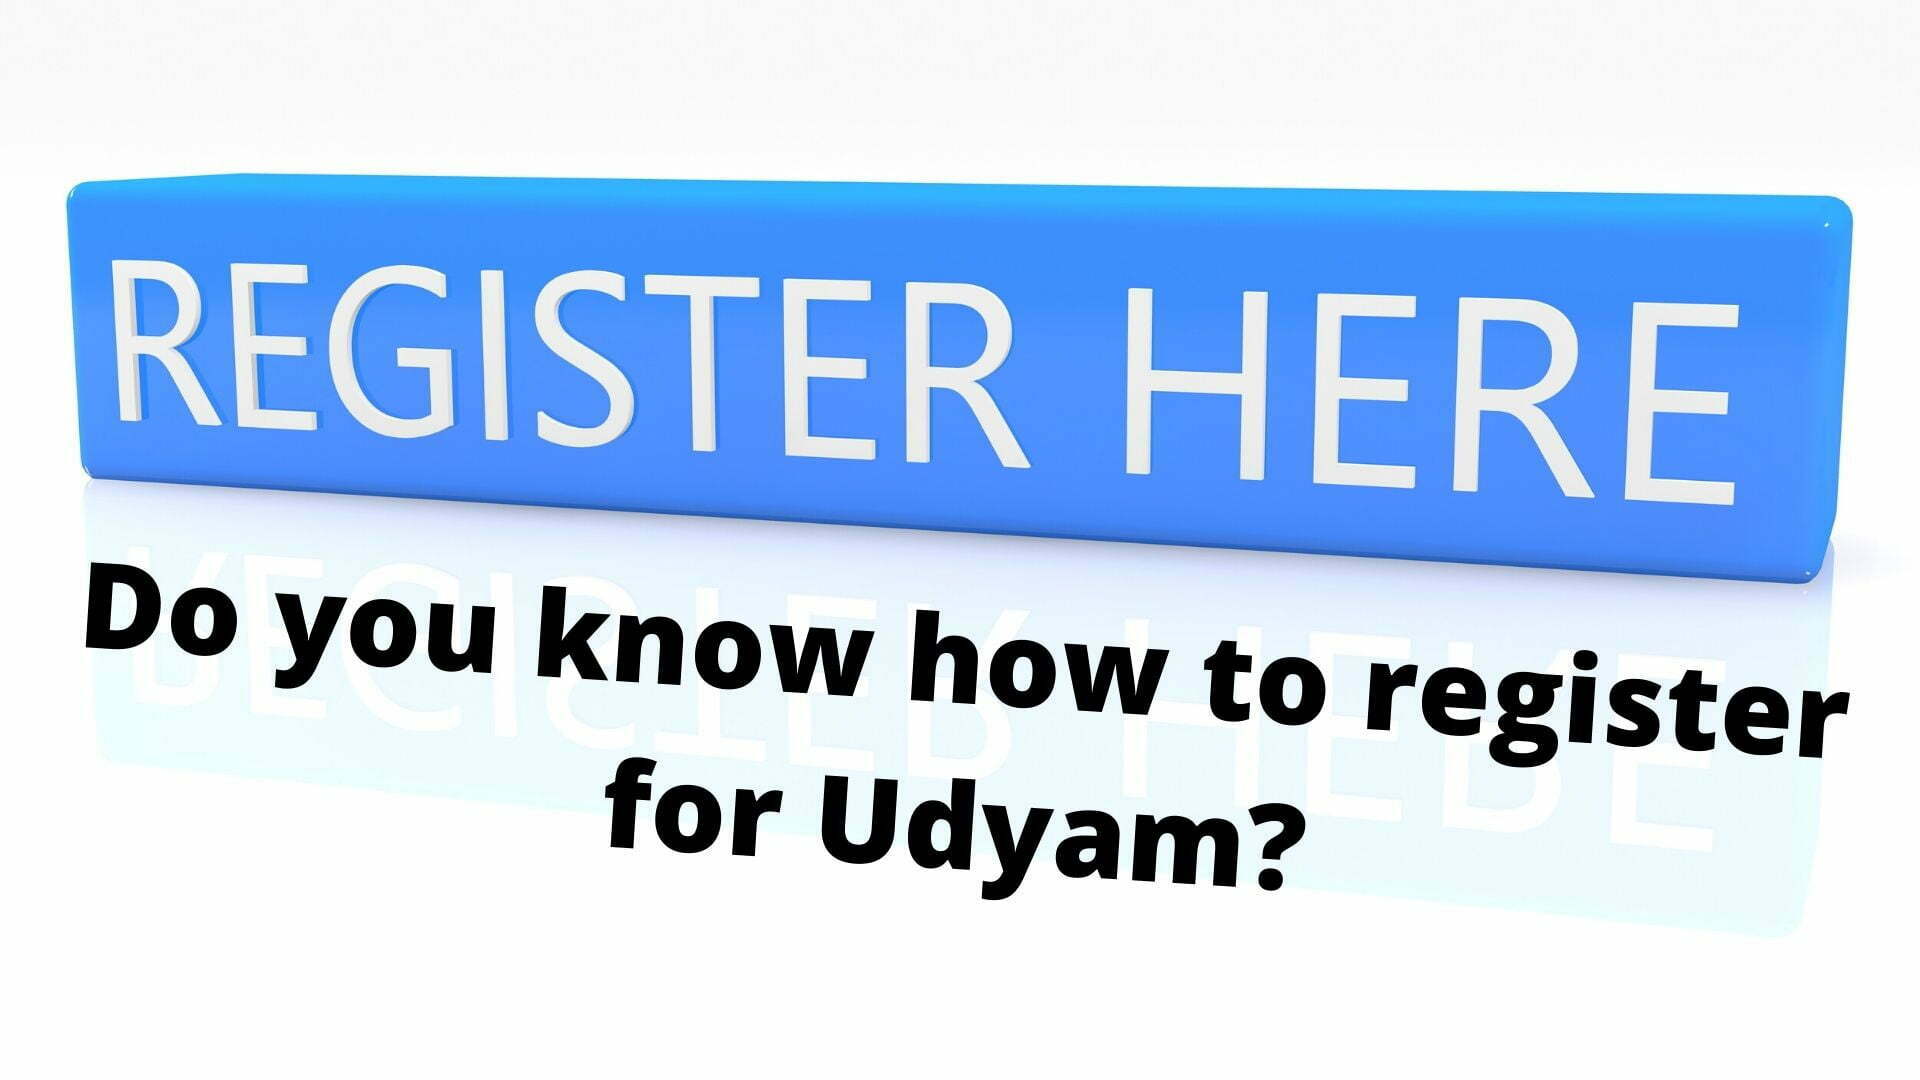 Do you know how to register for Udyam - Do you know how to register for Udyam?